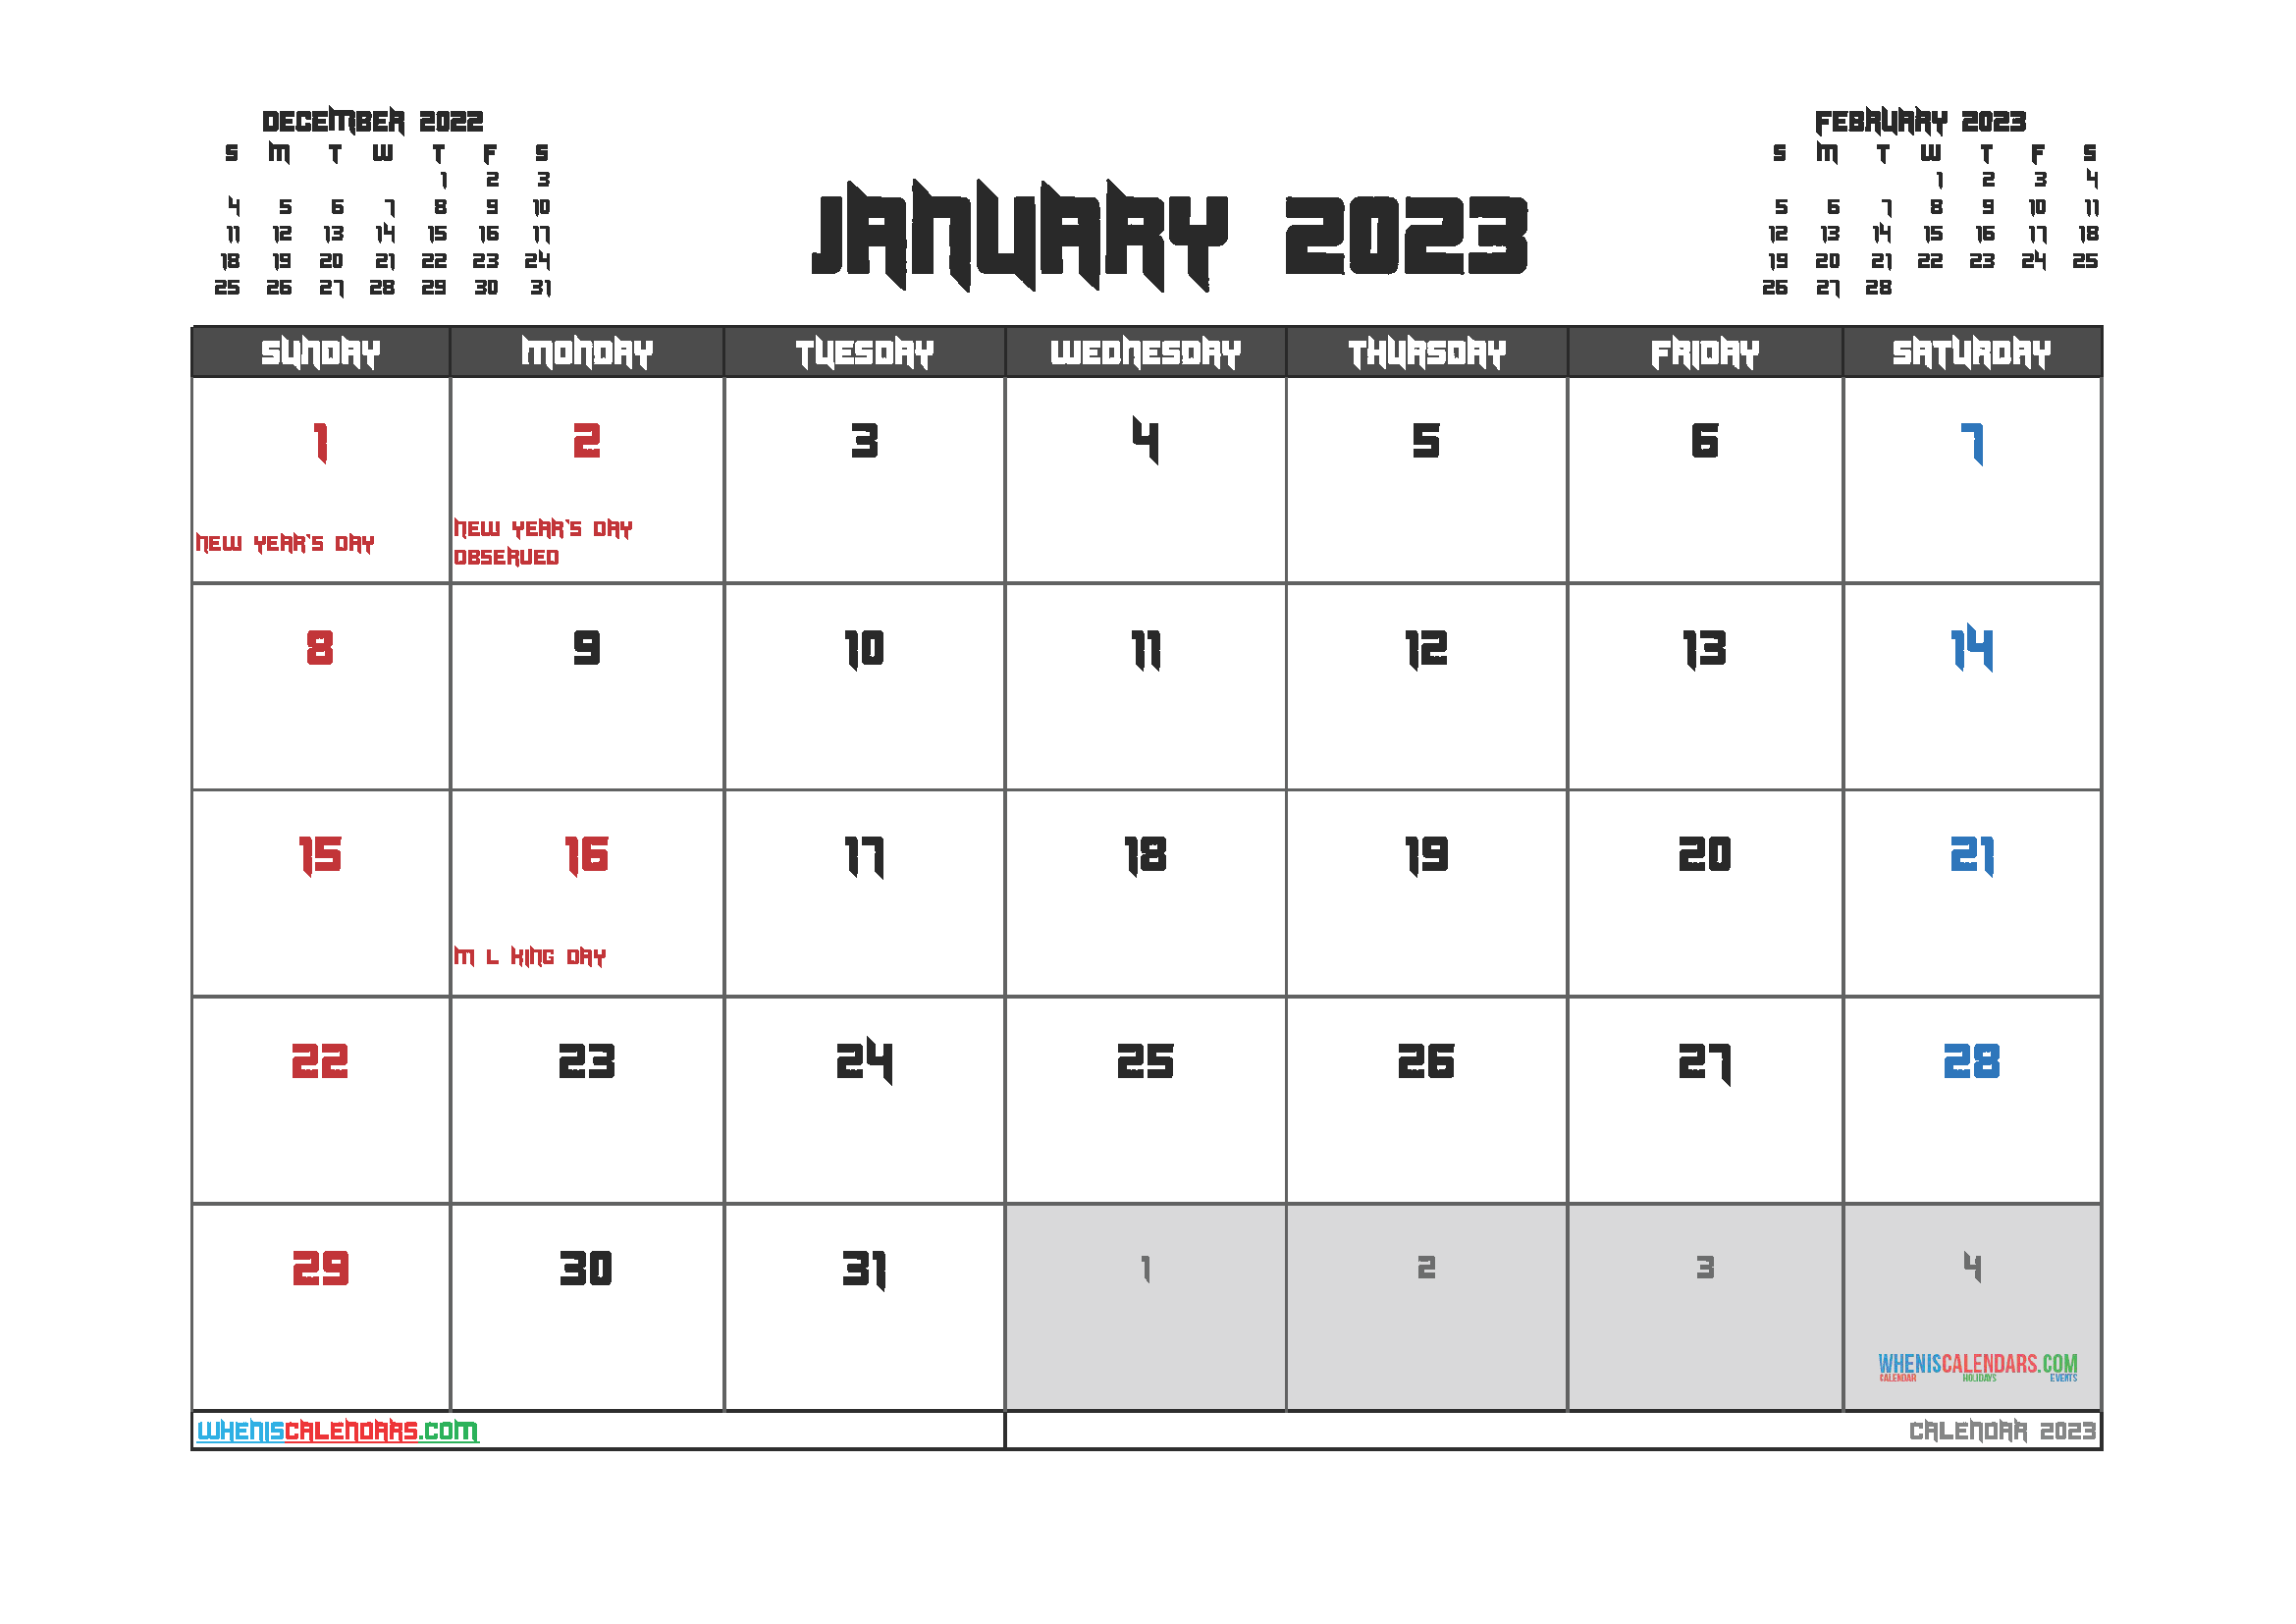 Free Printable January 2023 Calendar Pdf And Image